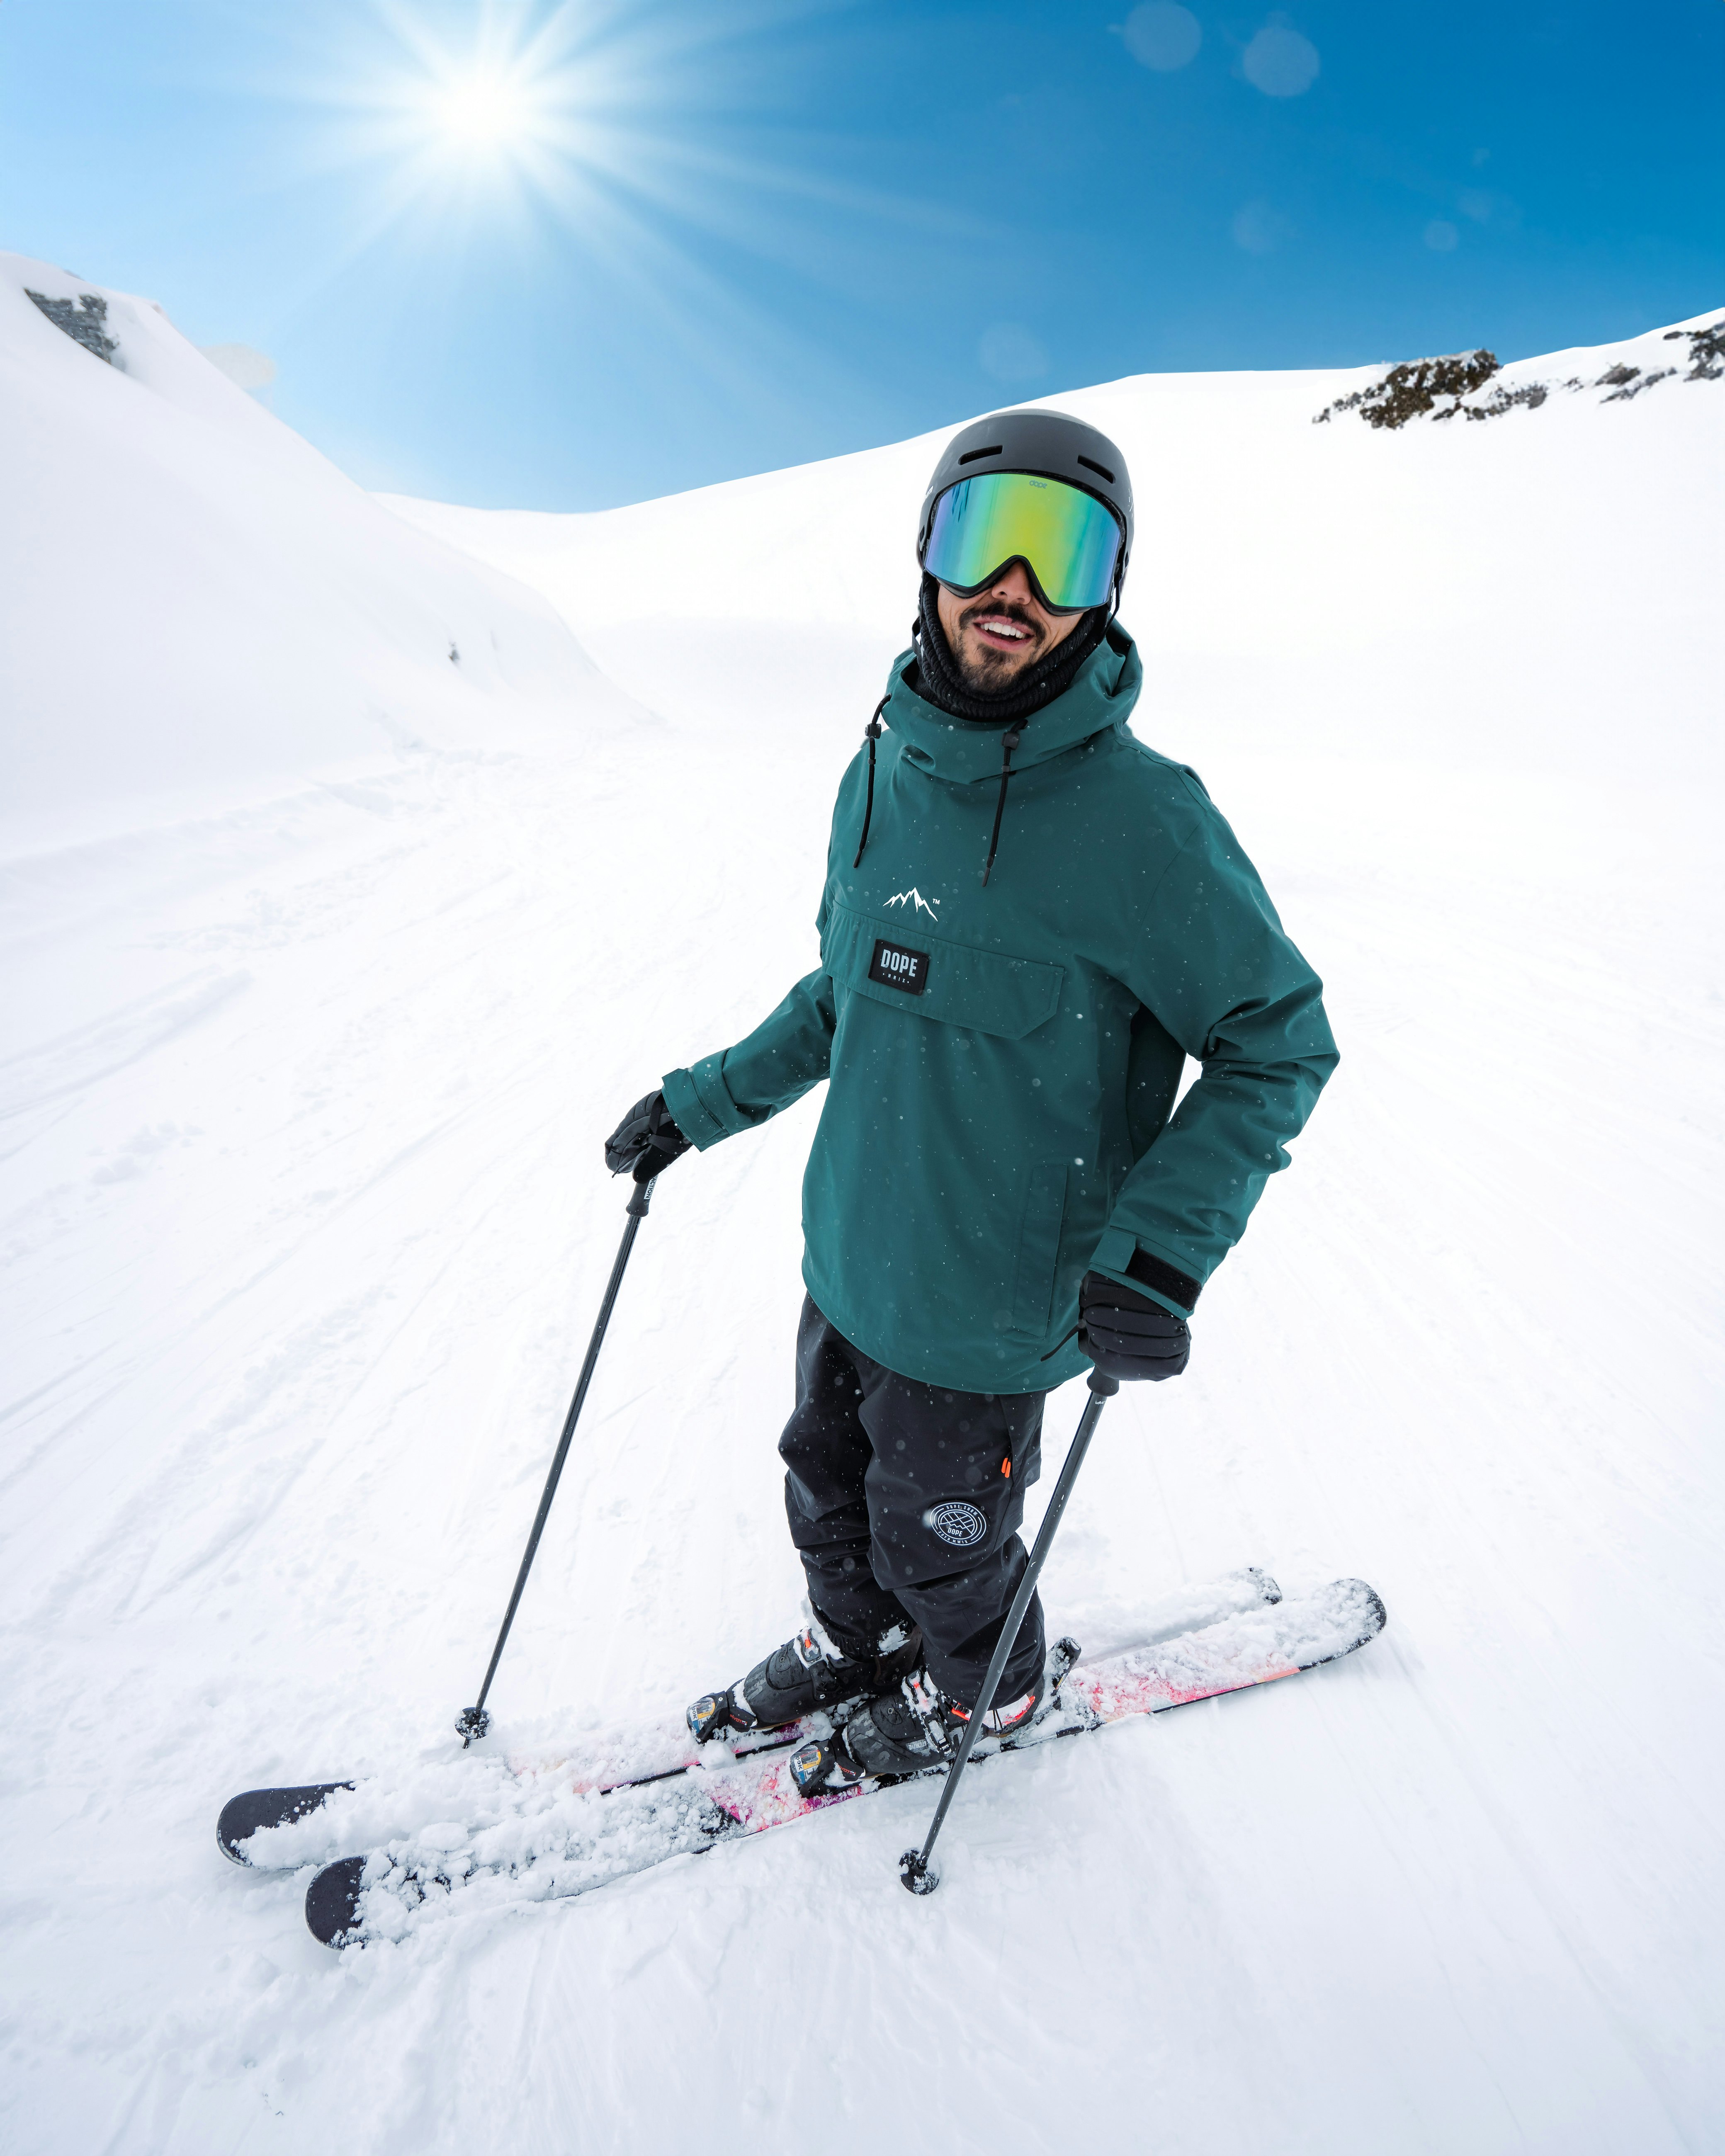 Elige un esquí que se adapte a tus habilidades